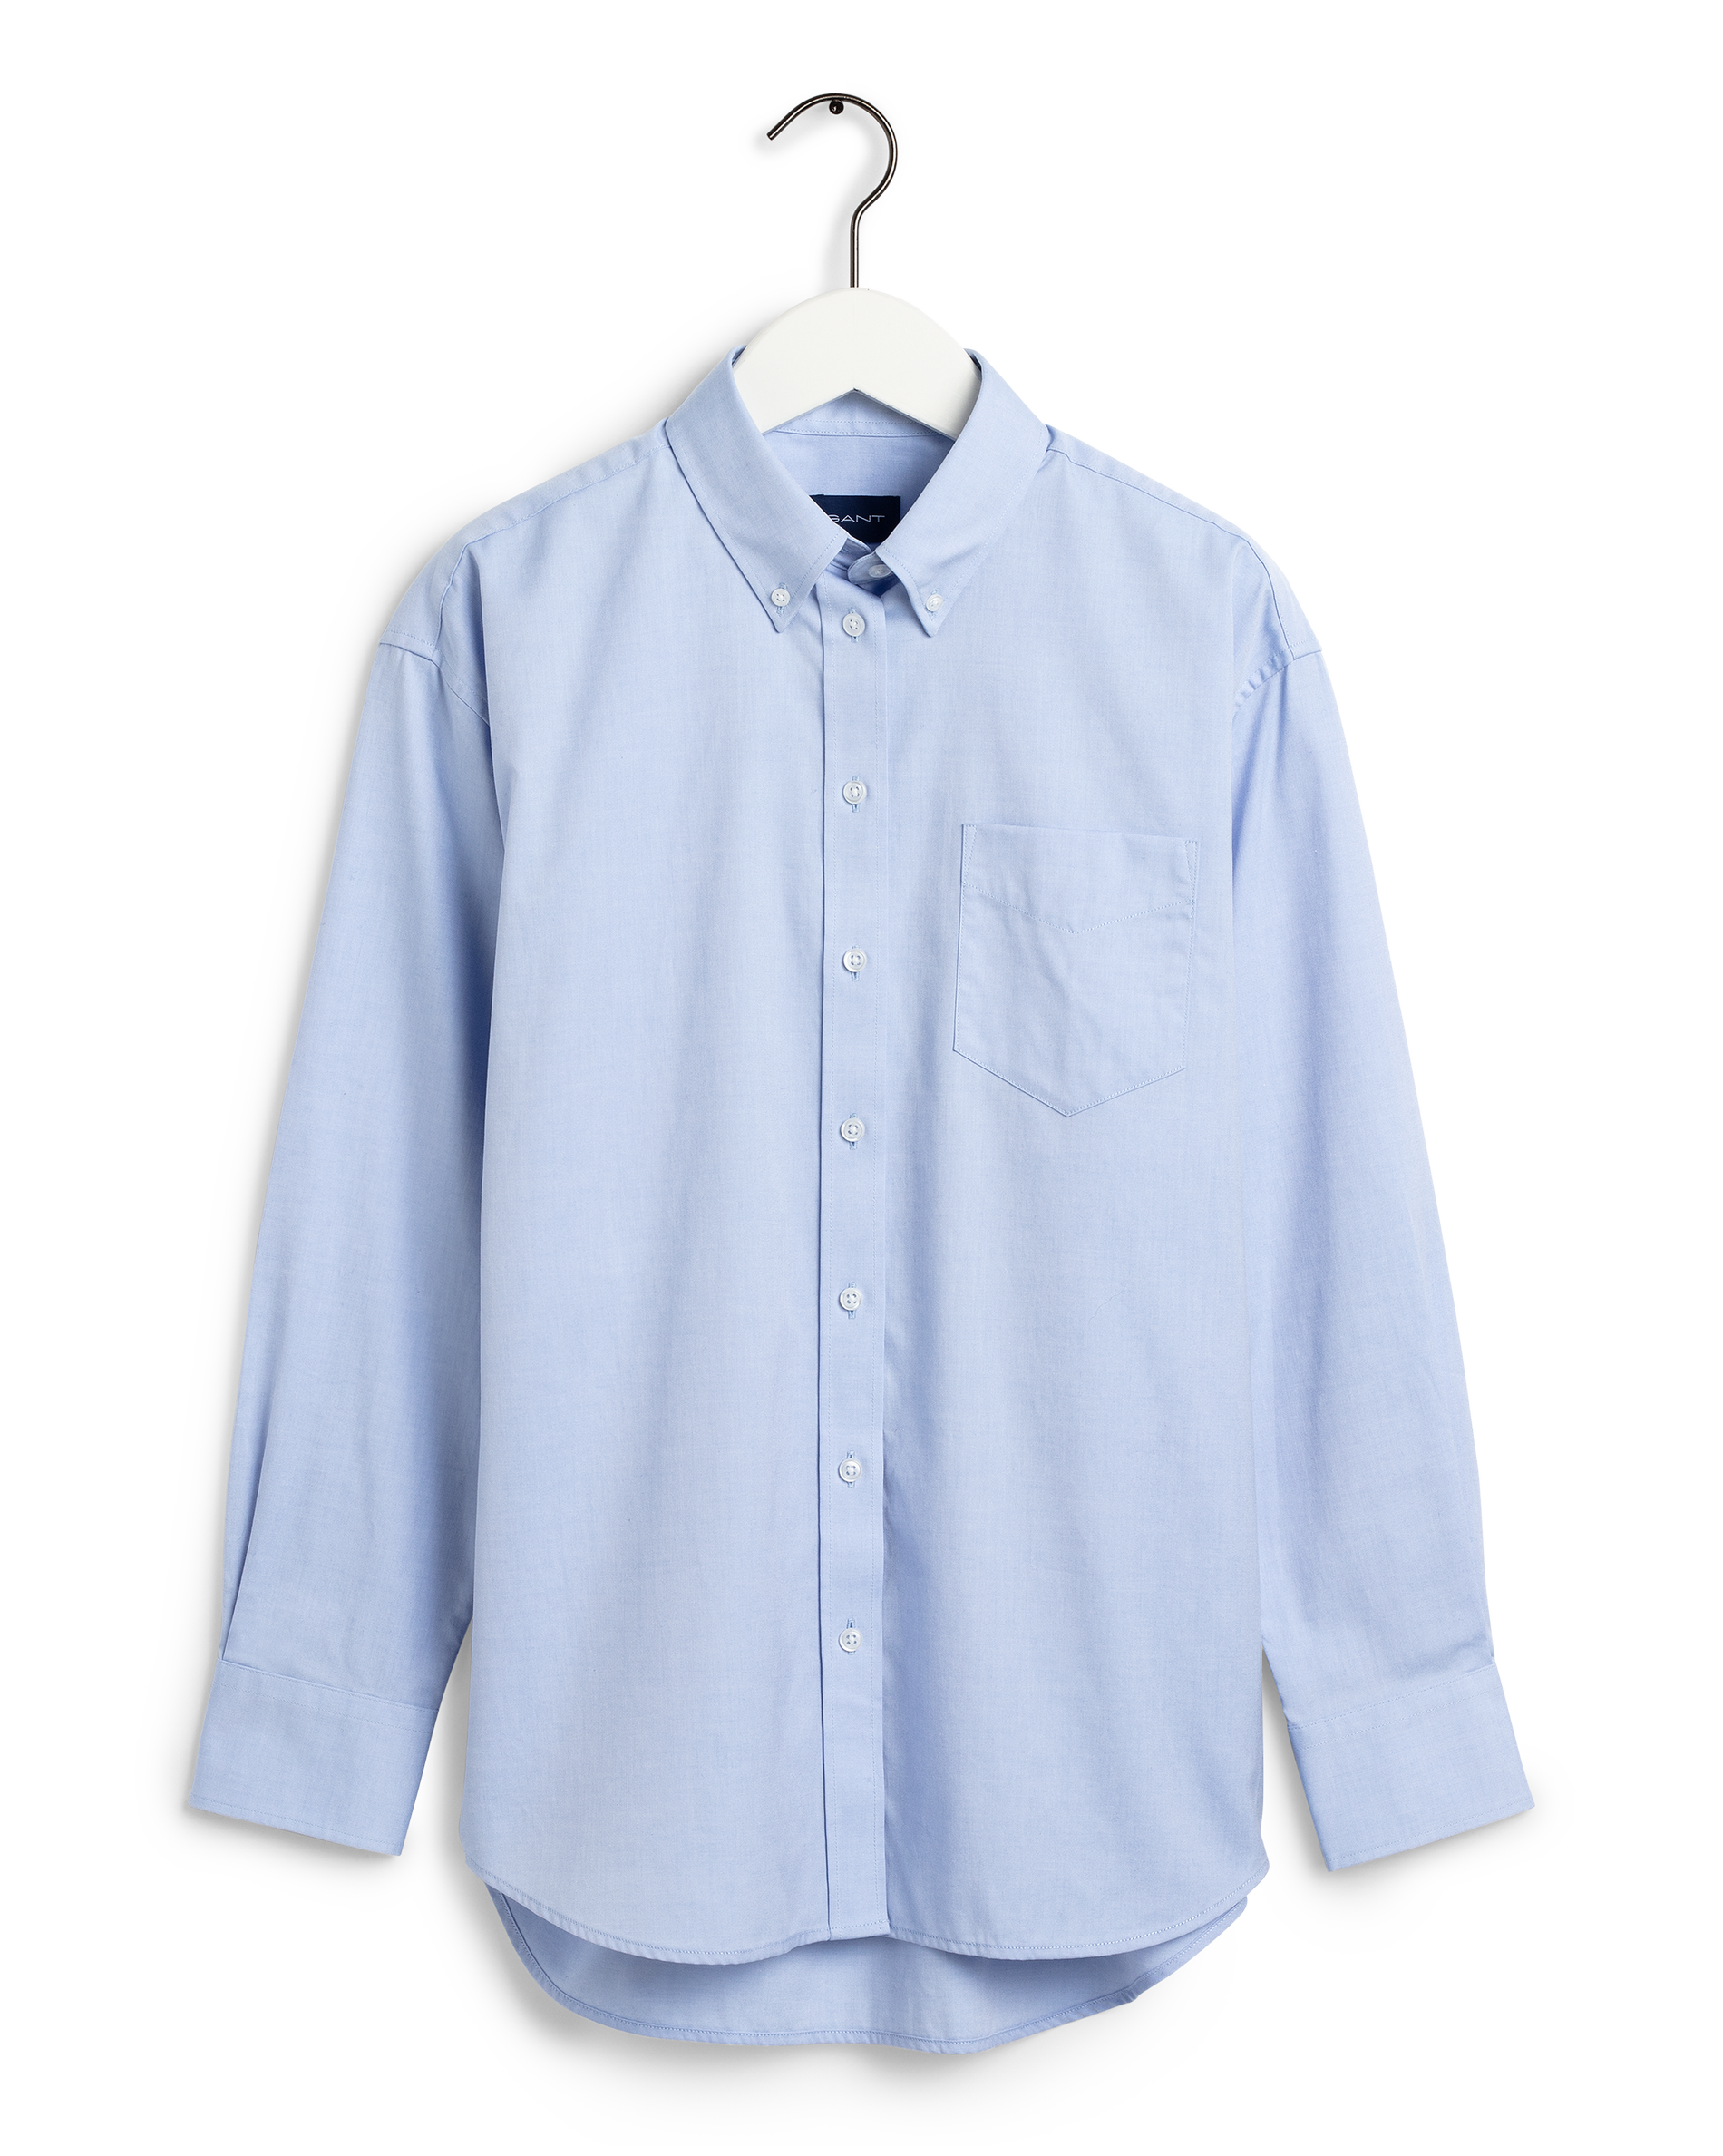 Ljusblå skjorta med button down-krage, 999 kronor, Gant.